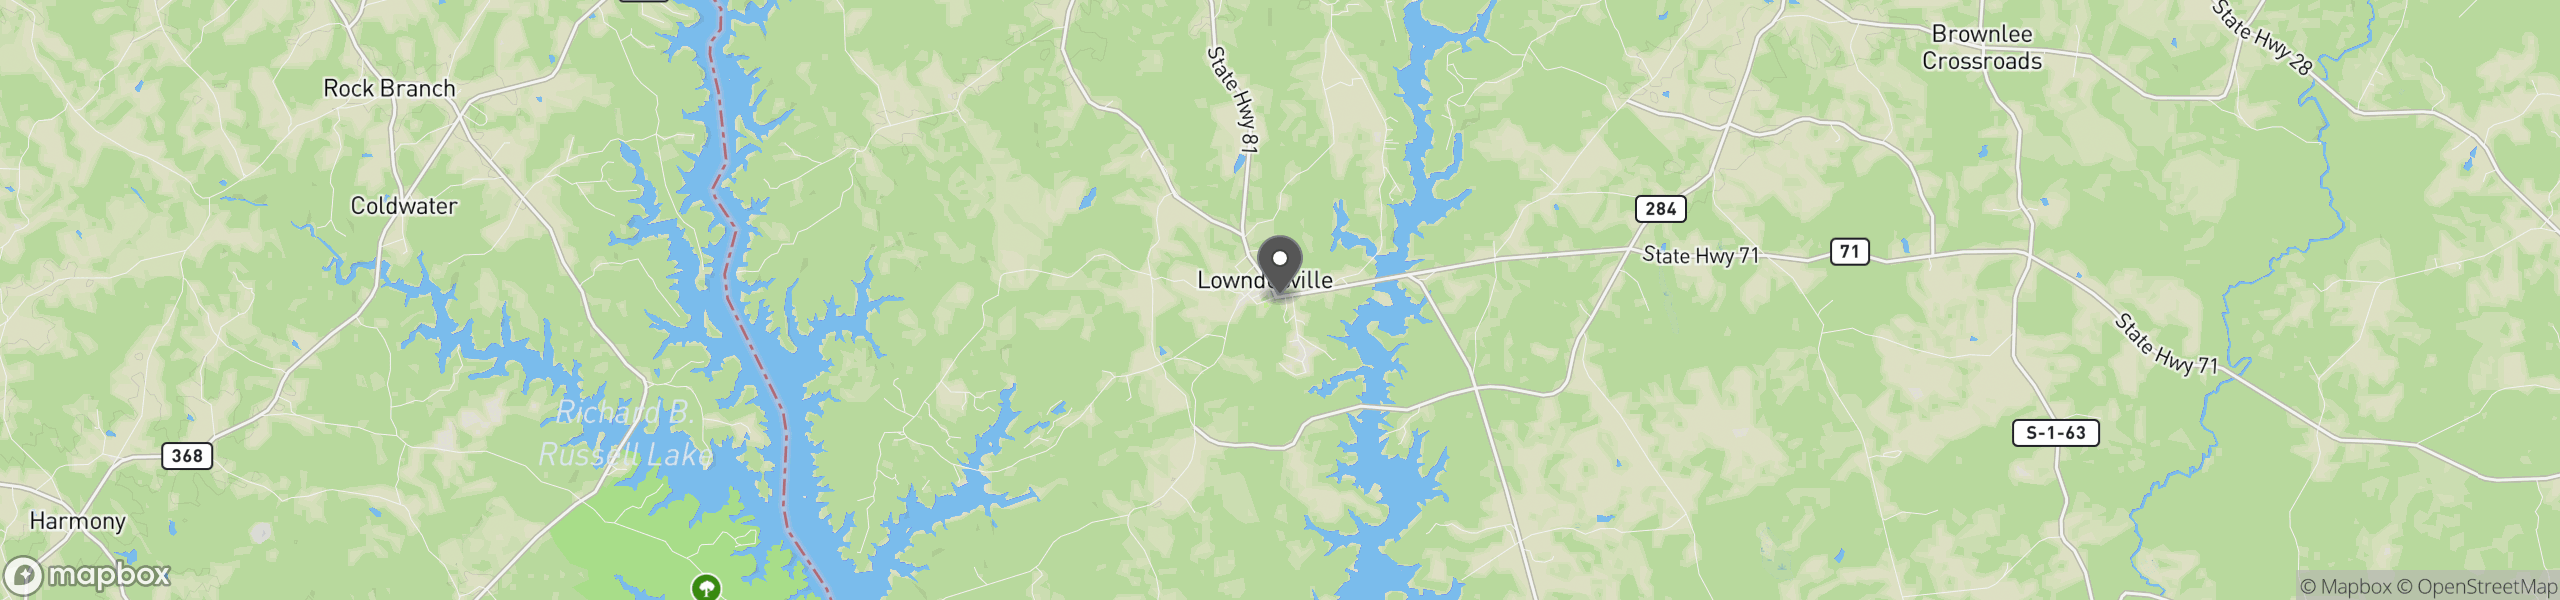 Lowndesville, SC